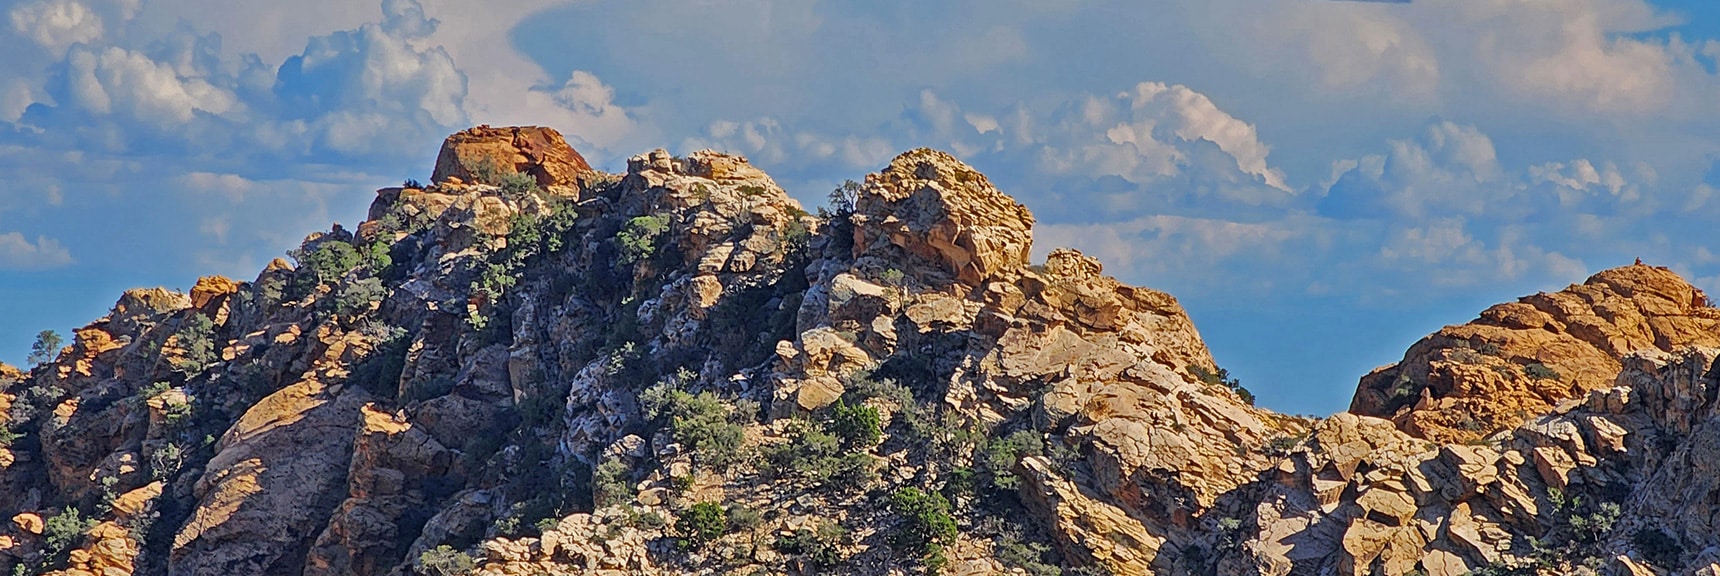 2 Summits of Hollow Rock Peak. I Made the Left Summit Today. | Hollow Rock Peak | Rainbow Mountain Wilderness, Nevada